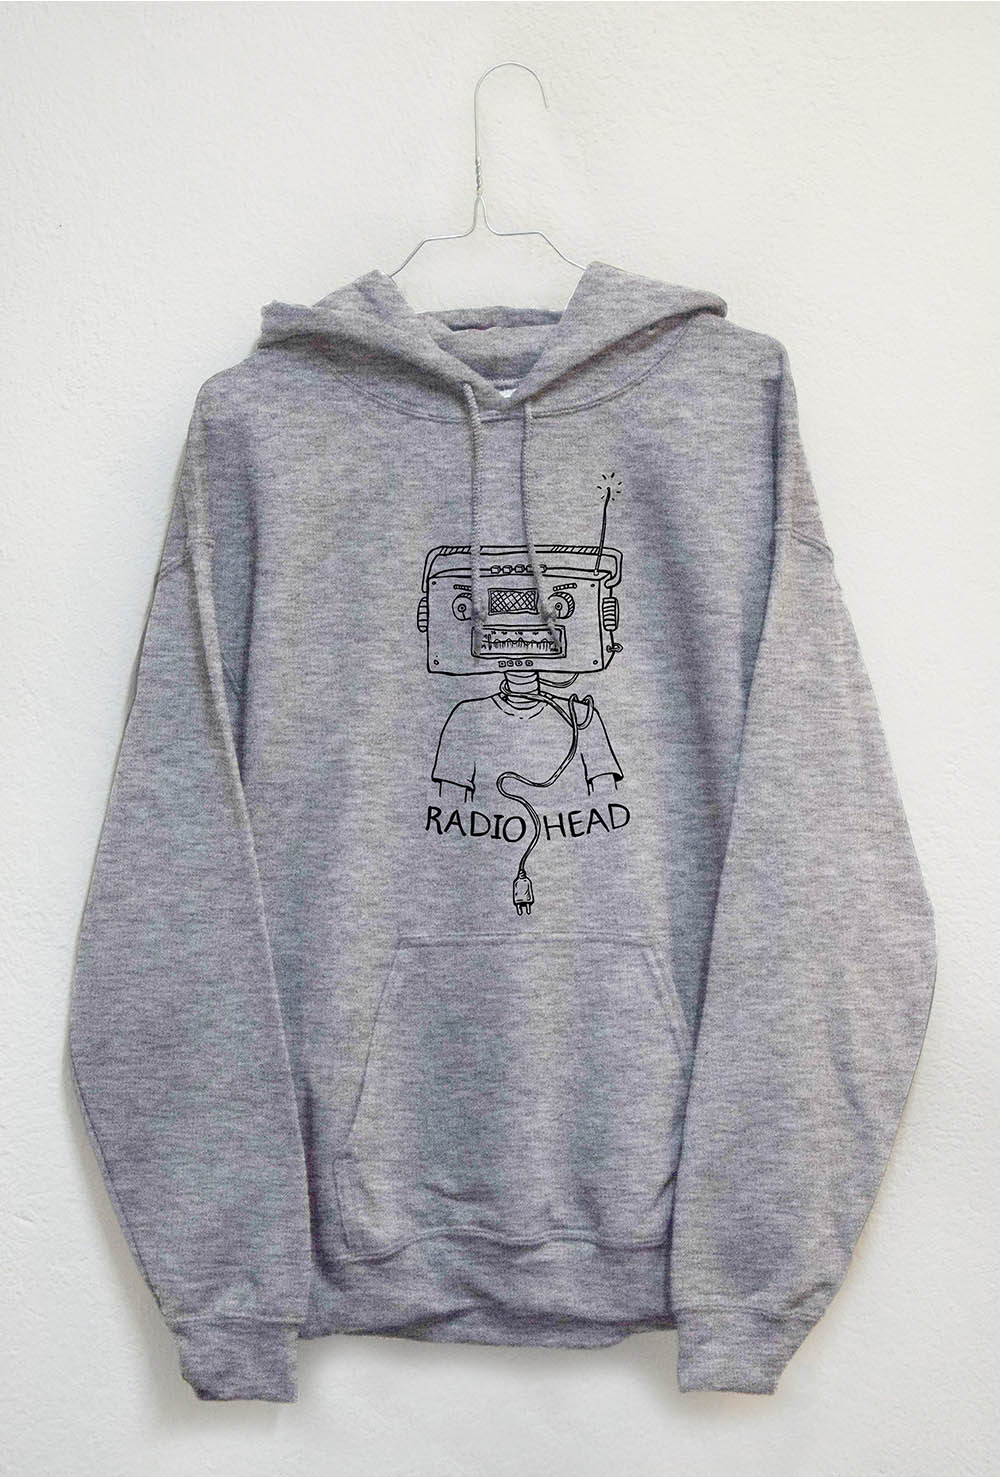 Subworks grey hoodies with radiohead